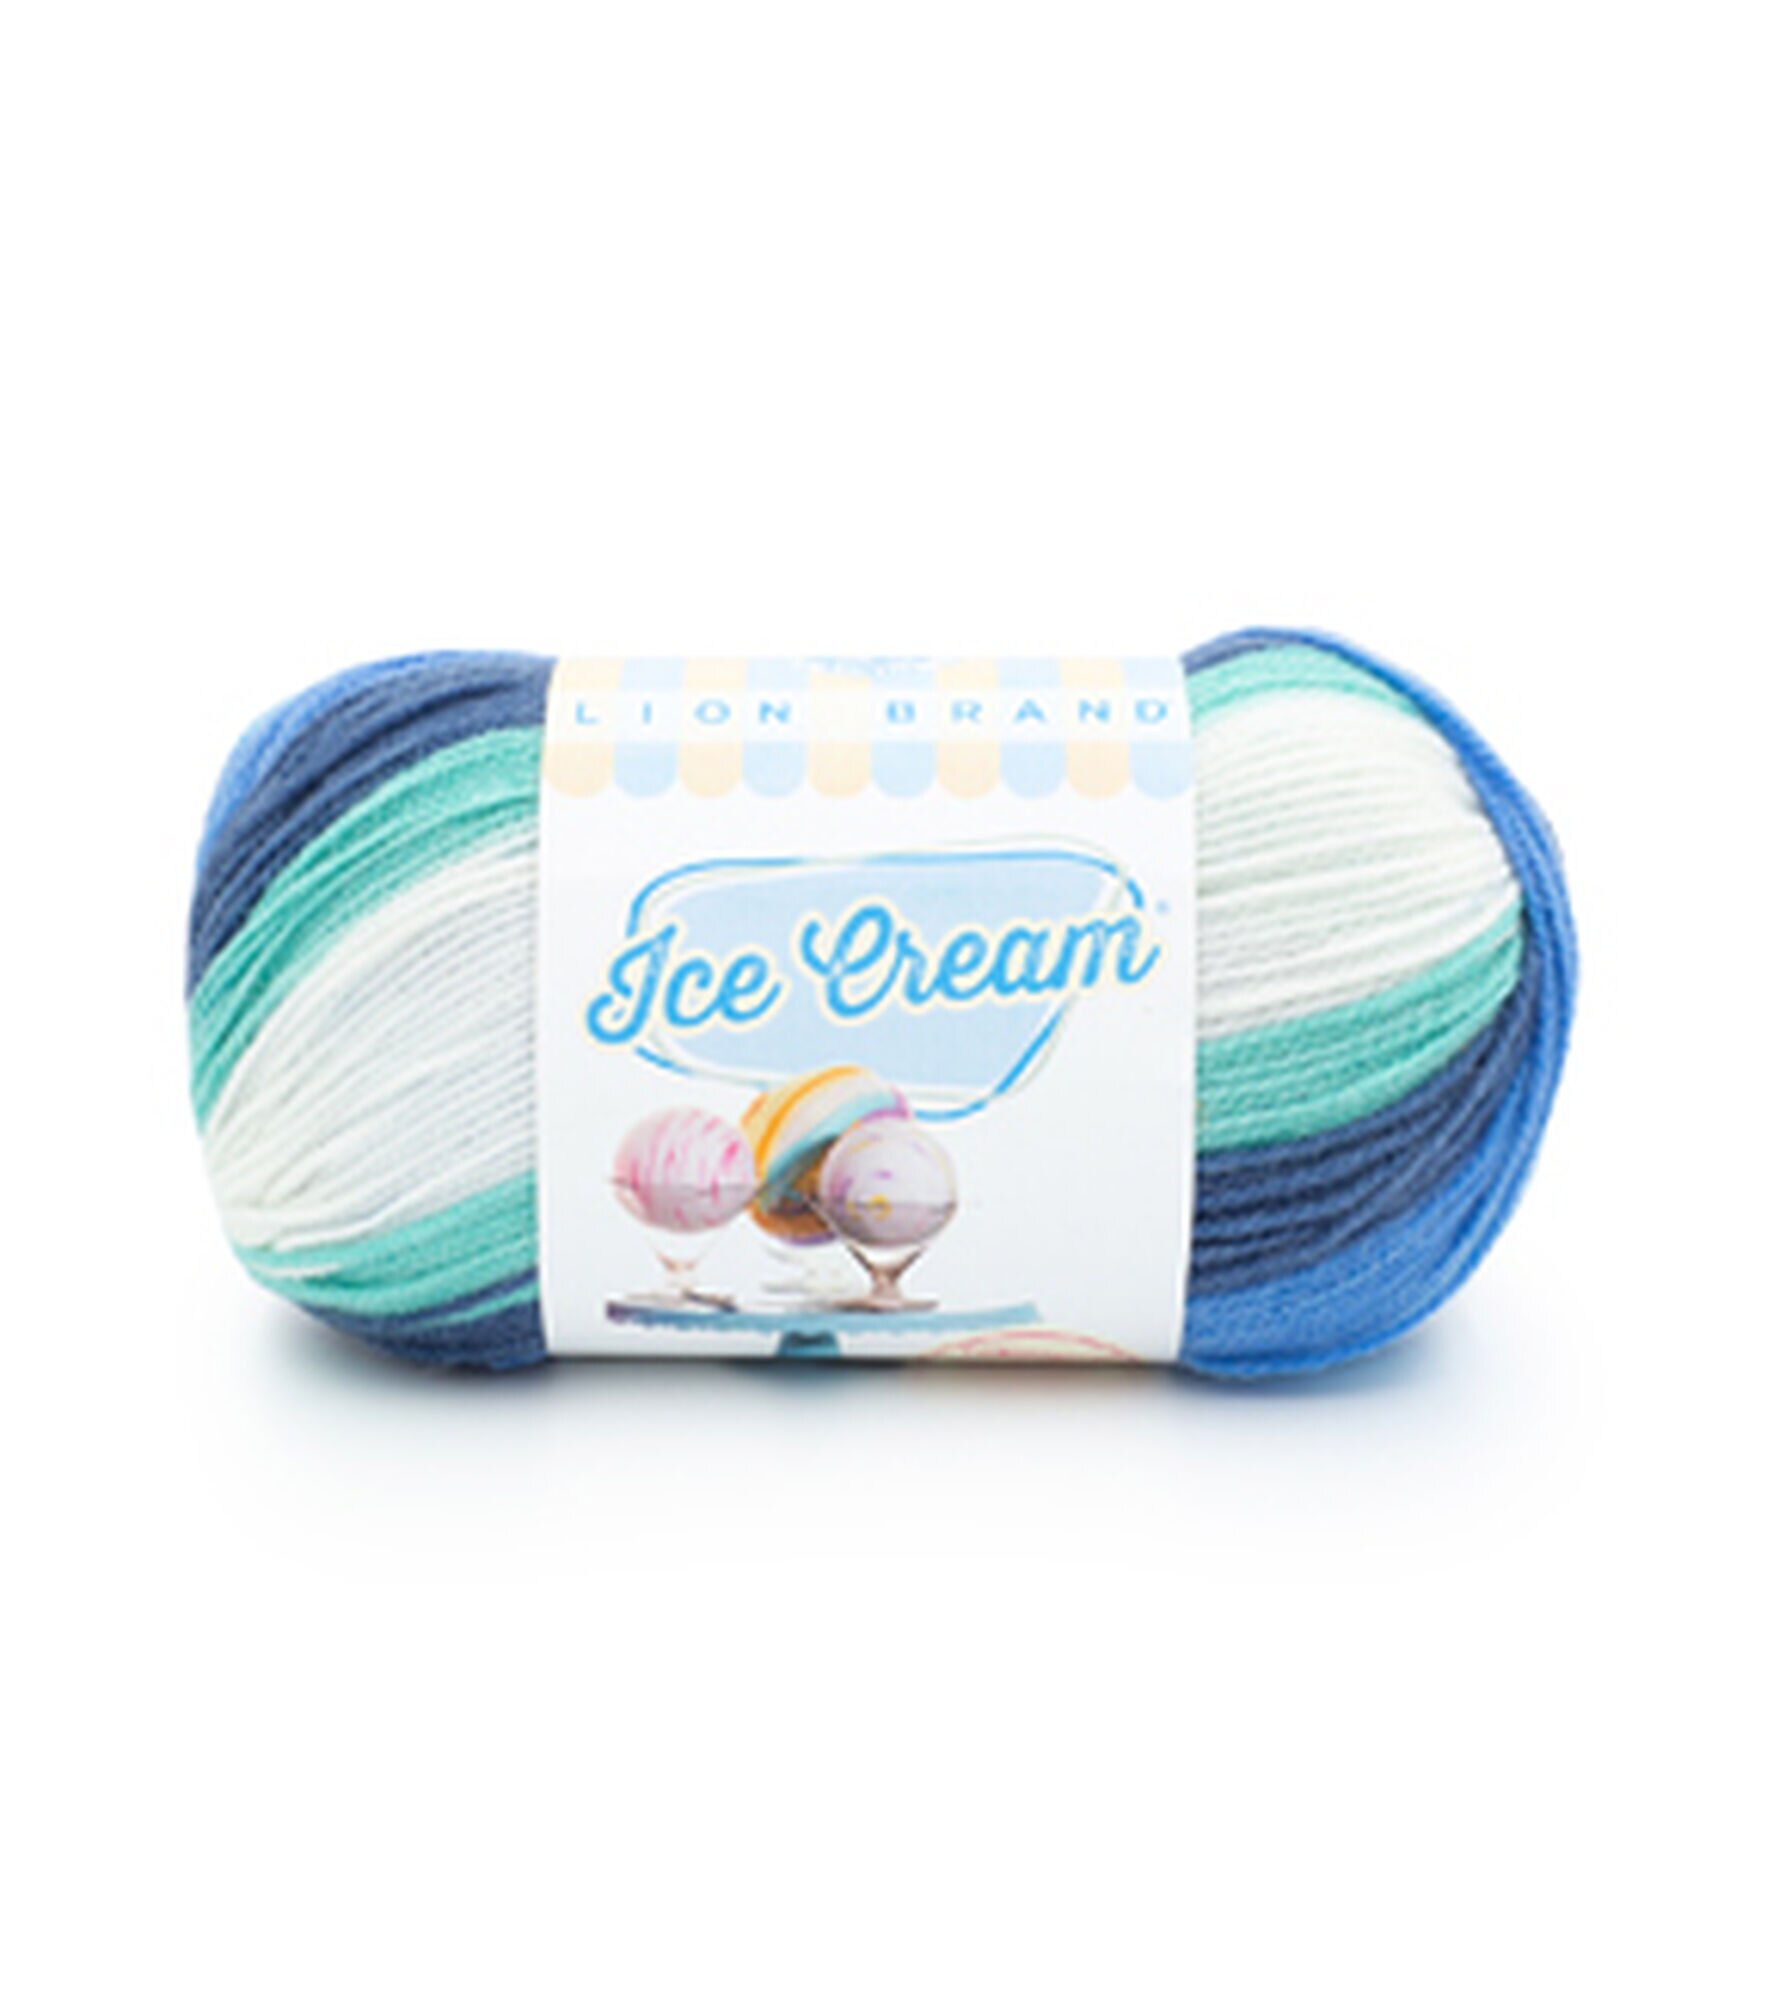 Lion Brand Ice Cream Big Scoop Yarn 2 Bundle